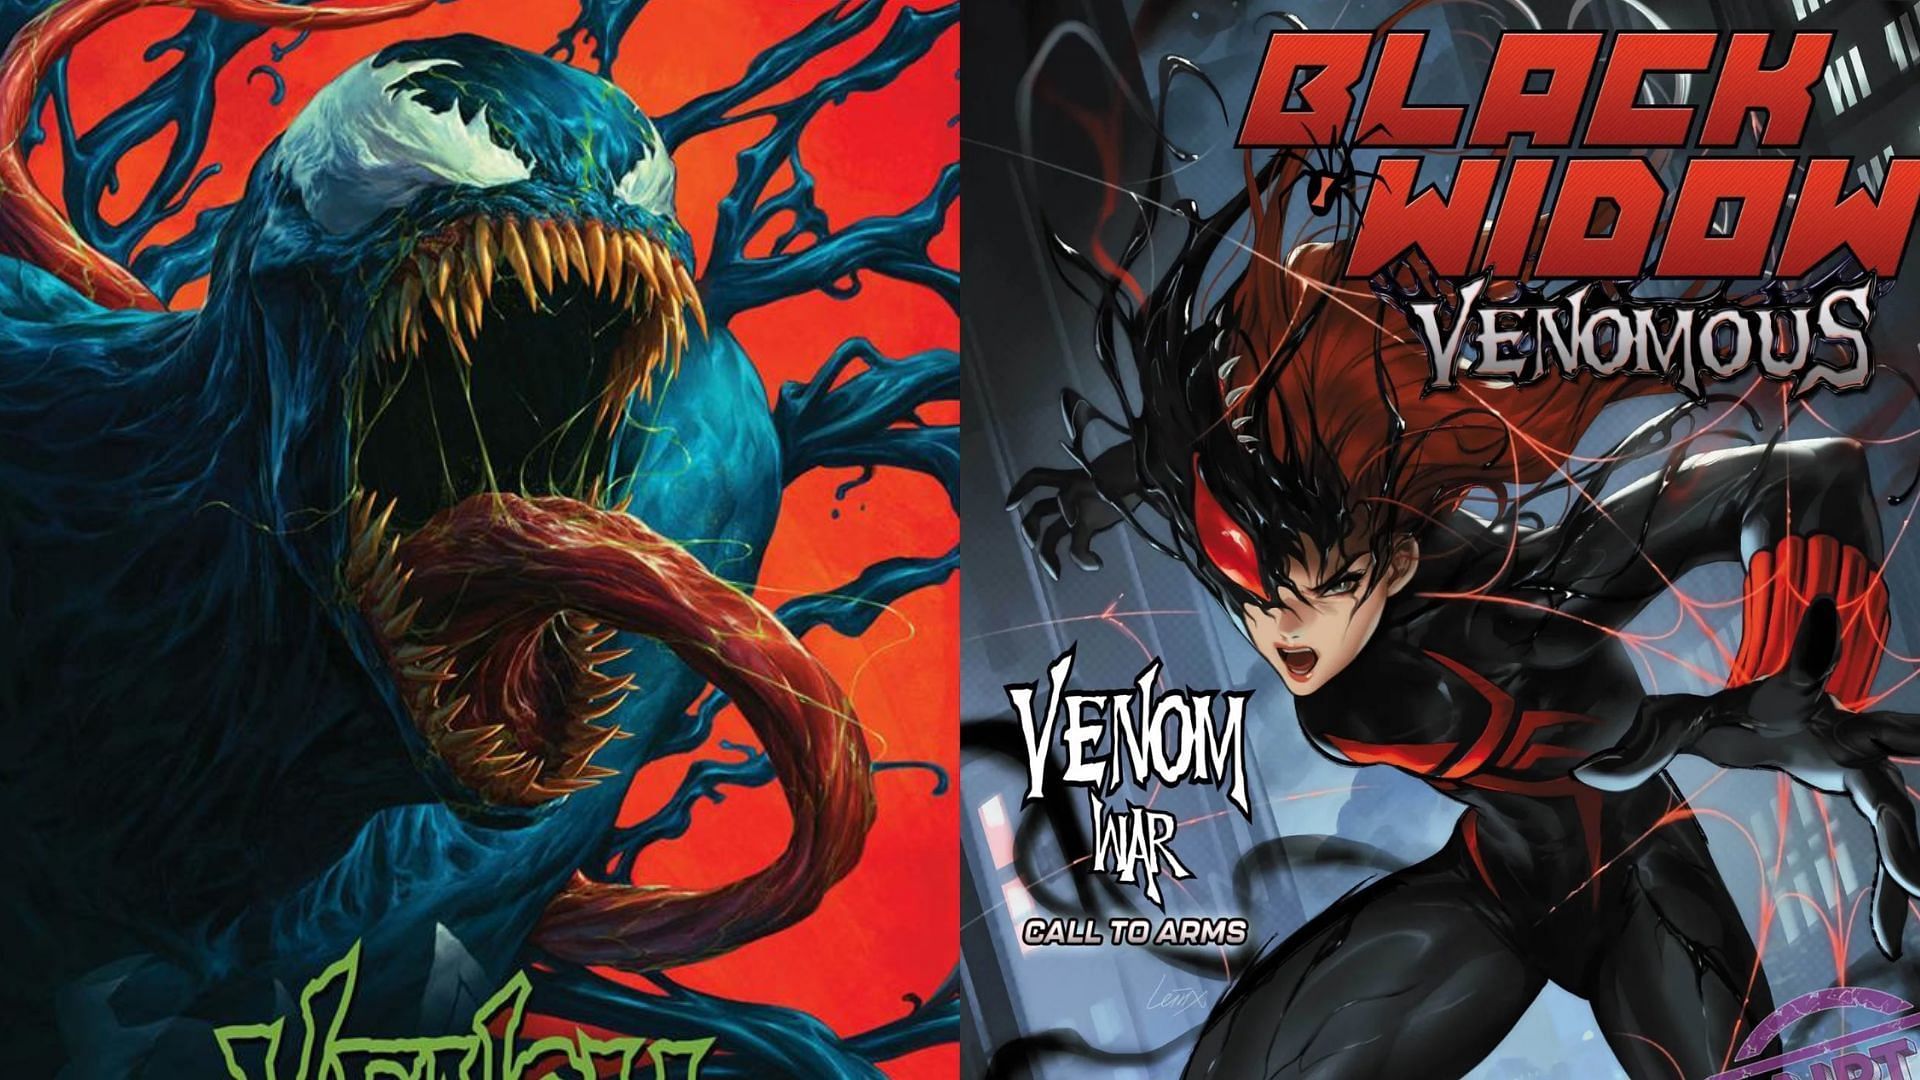 Black Widow will team up with a new Venom symbiote (Image via Marvel)